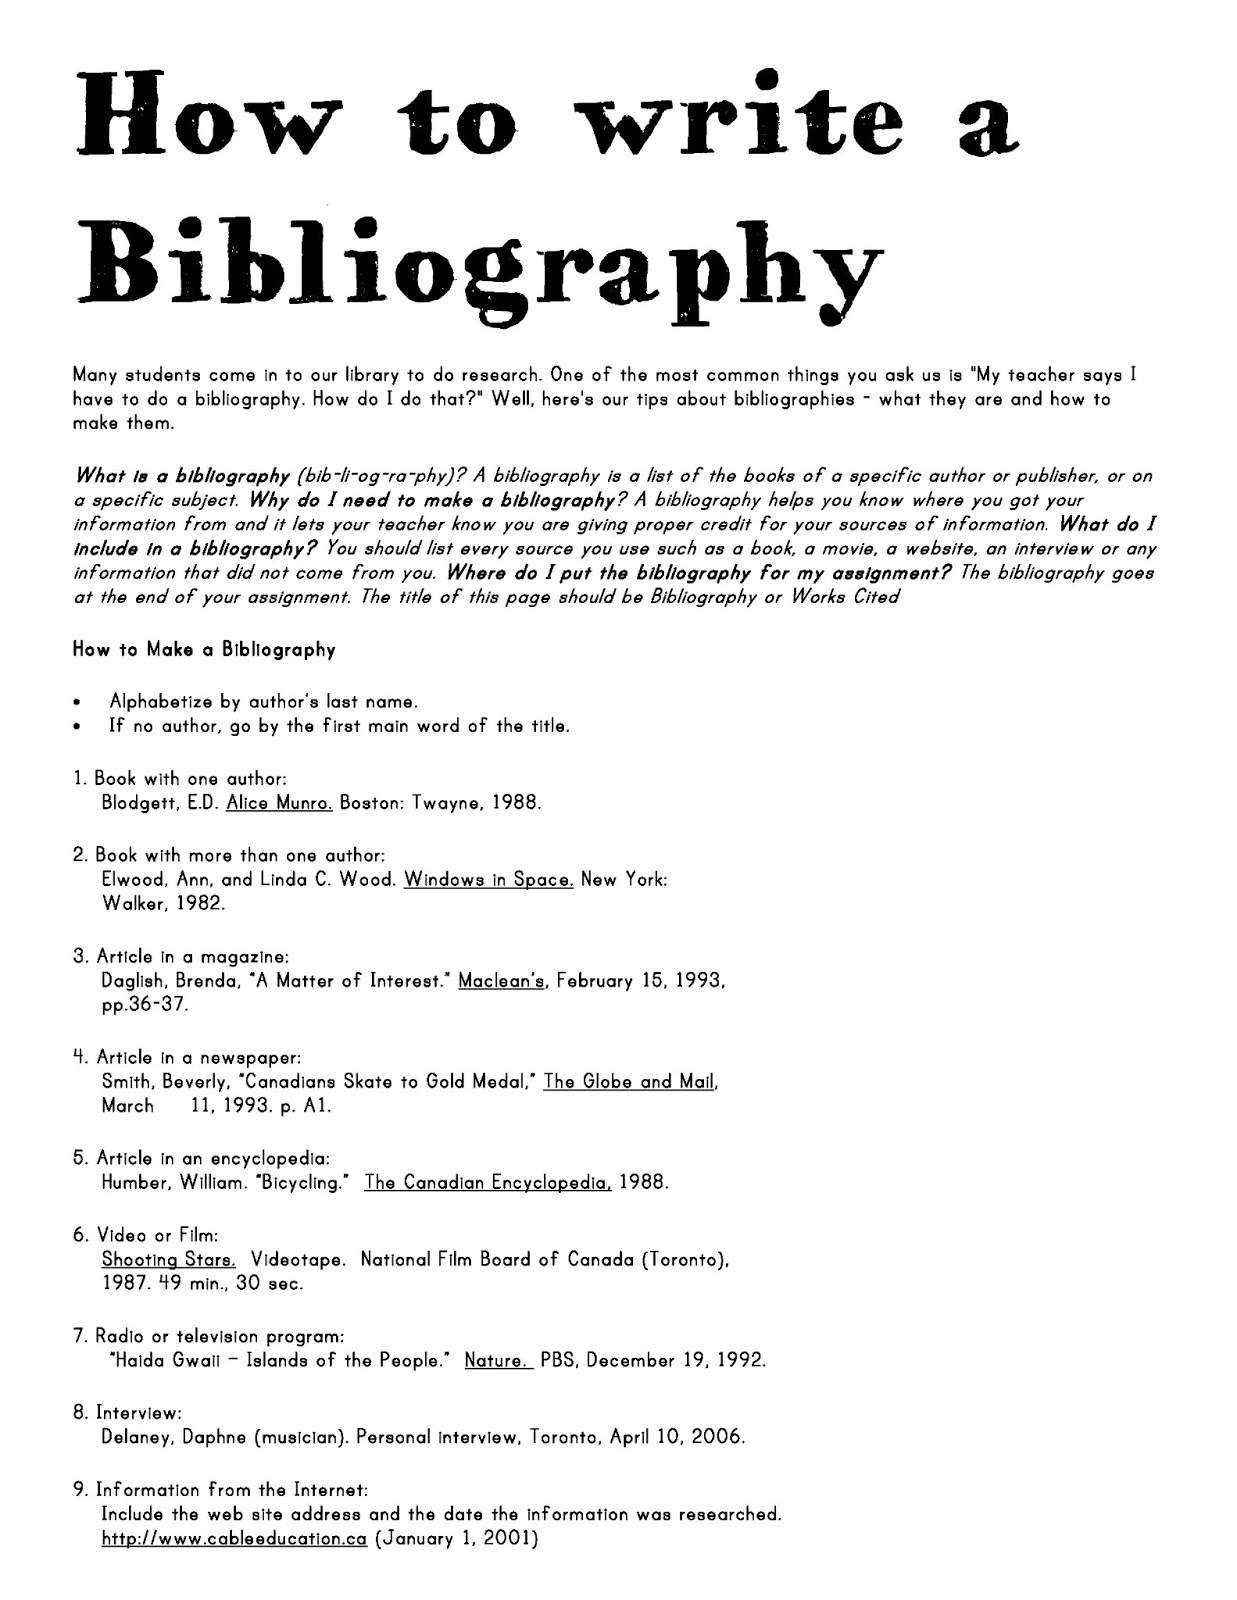 Writing a Bibliography: APA Format